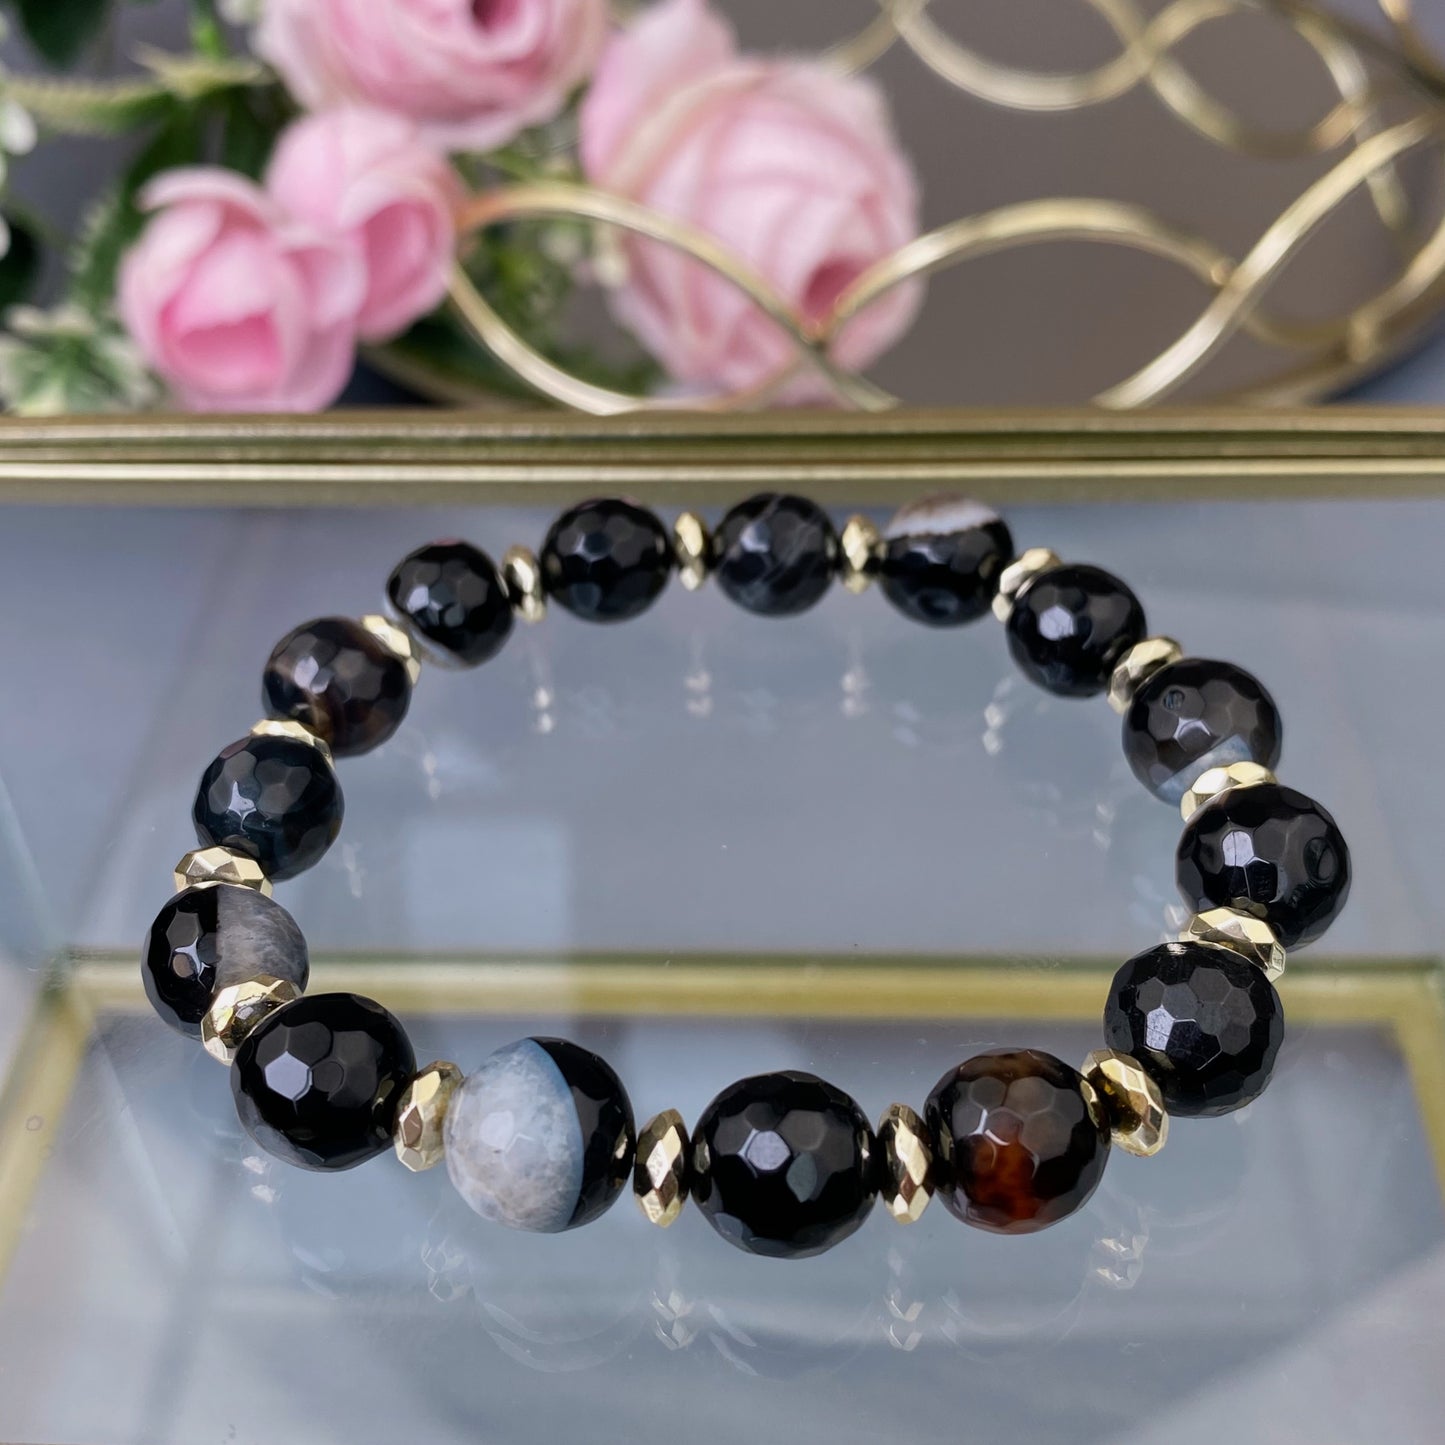 Agate bracelet with decorative elements (Agate, polished shape, 10mm)